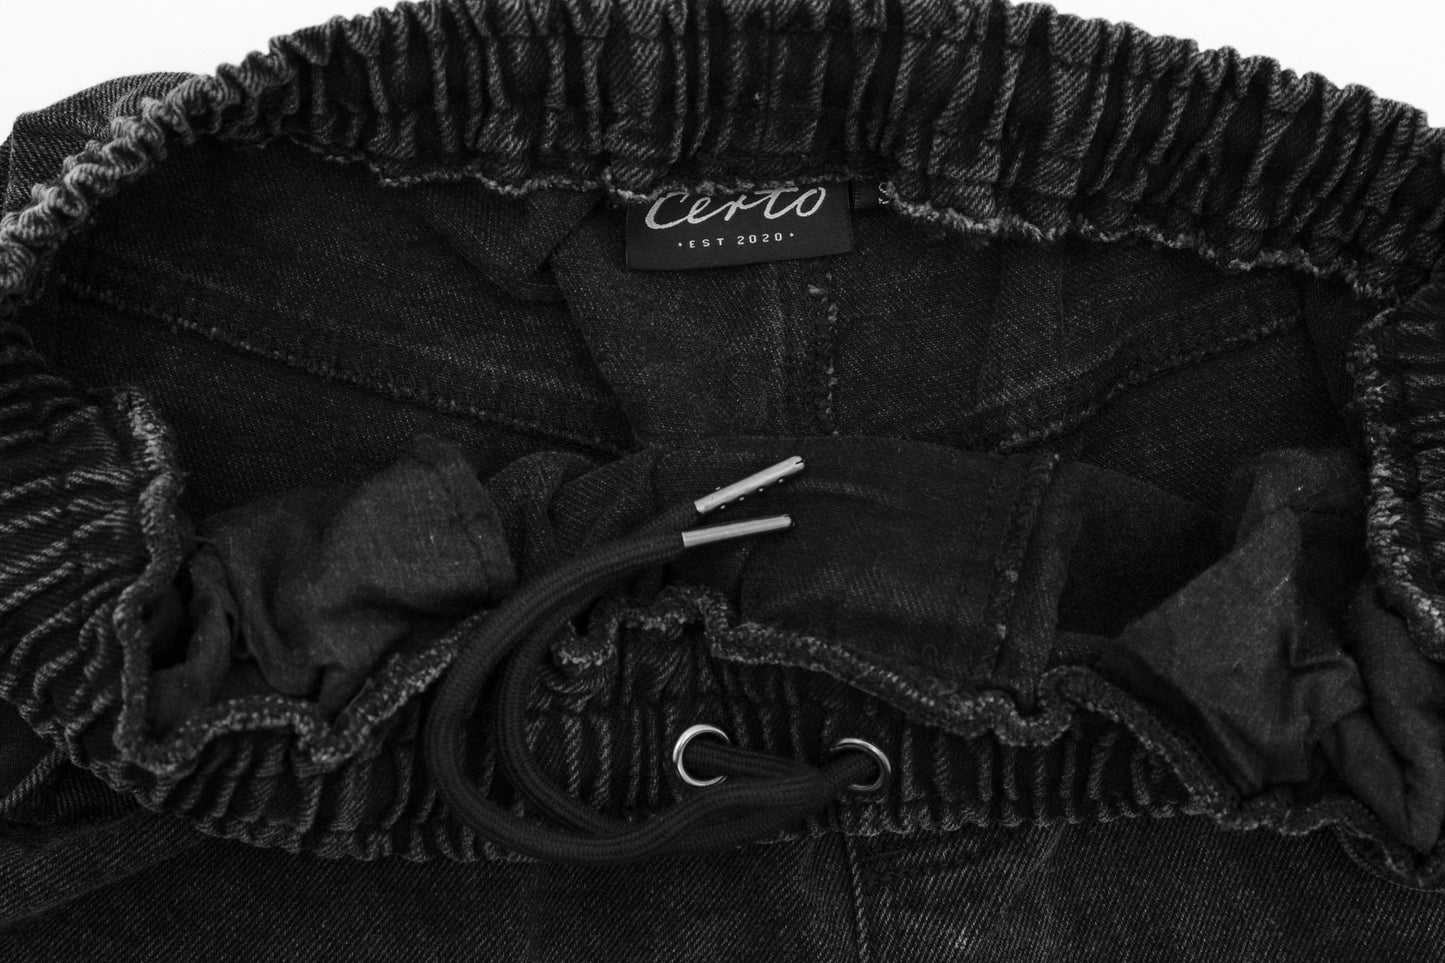 Denim Jeans T001 black washed pant